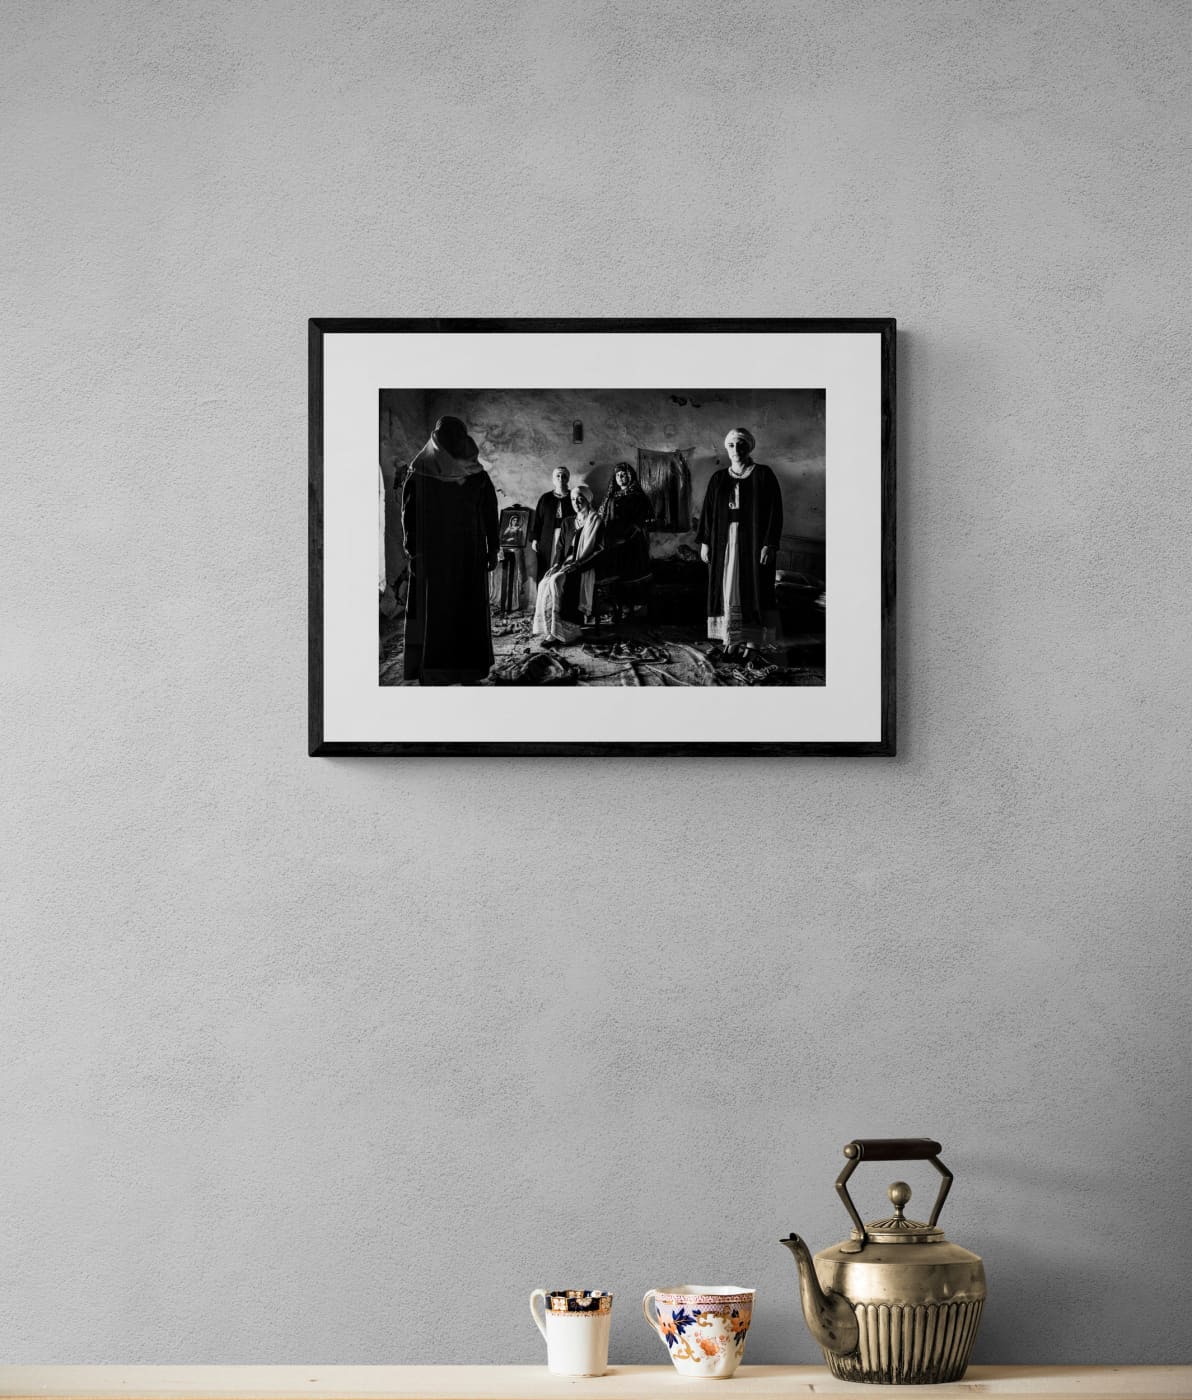 Black and White Photography Wall Art Greece | Kardamyla costumes Chios island Greece by George Tatakis - single framed photo